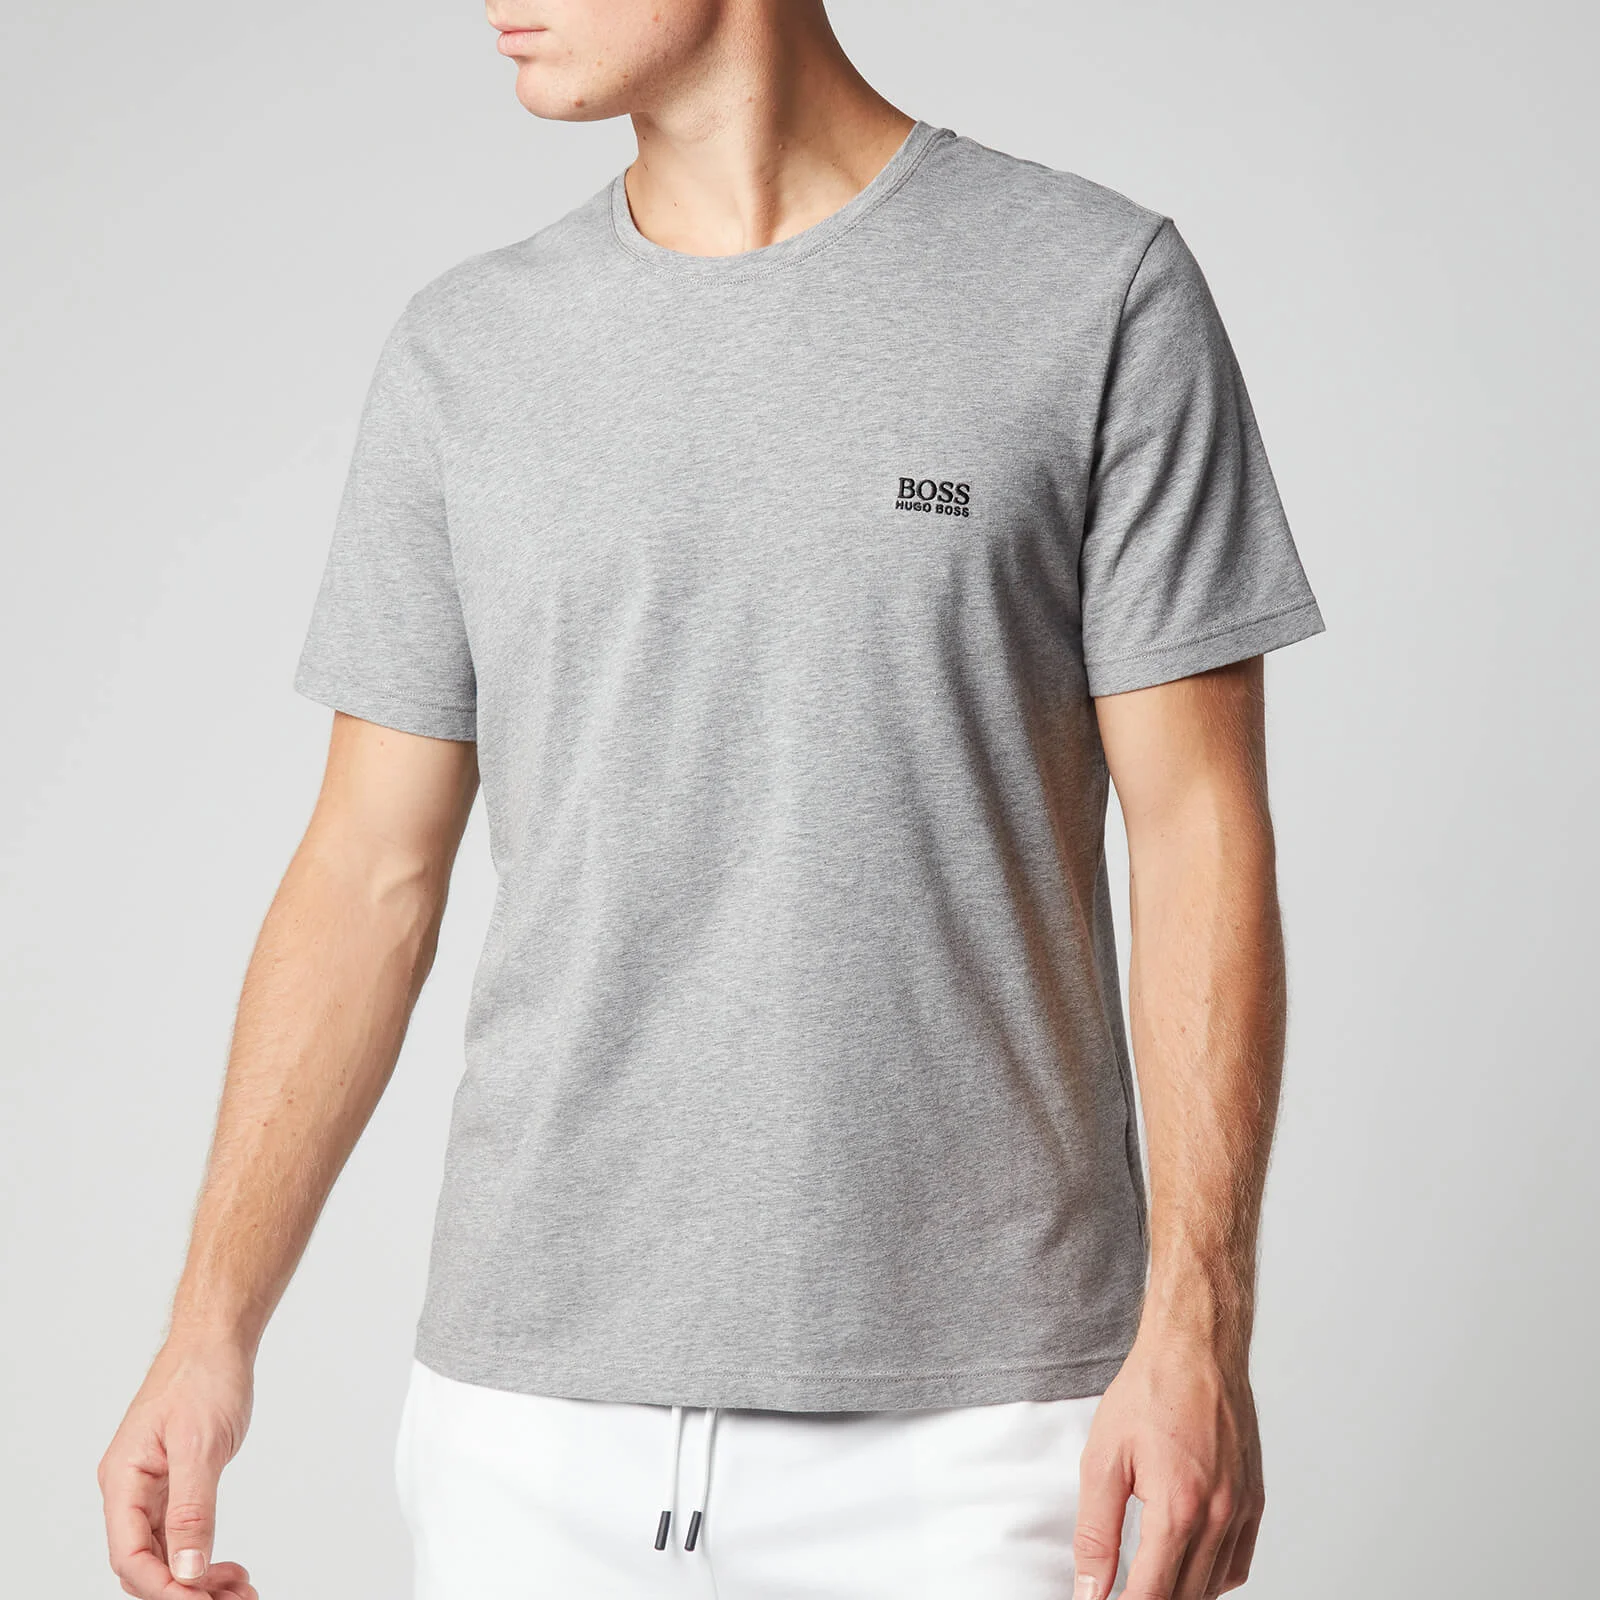 BOSS Bodywear Men's Mix&Match T-Shirt R - Medium Grey Image 1